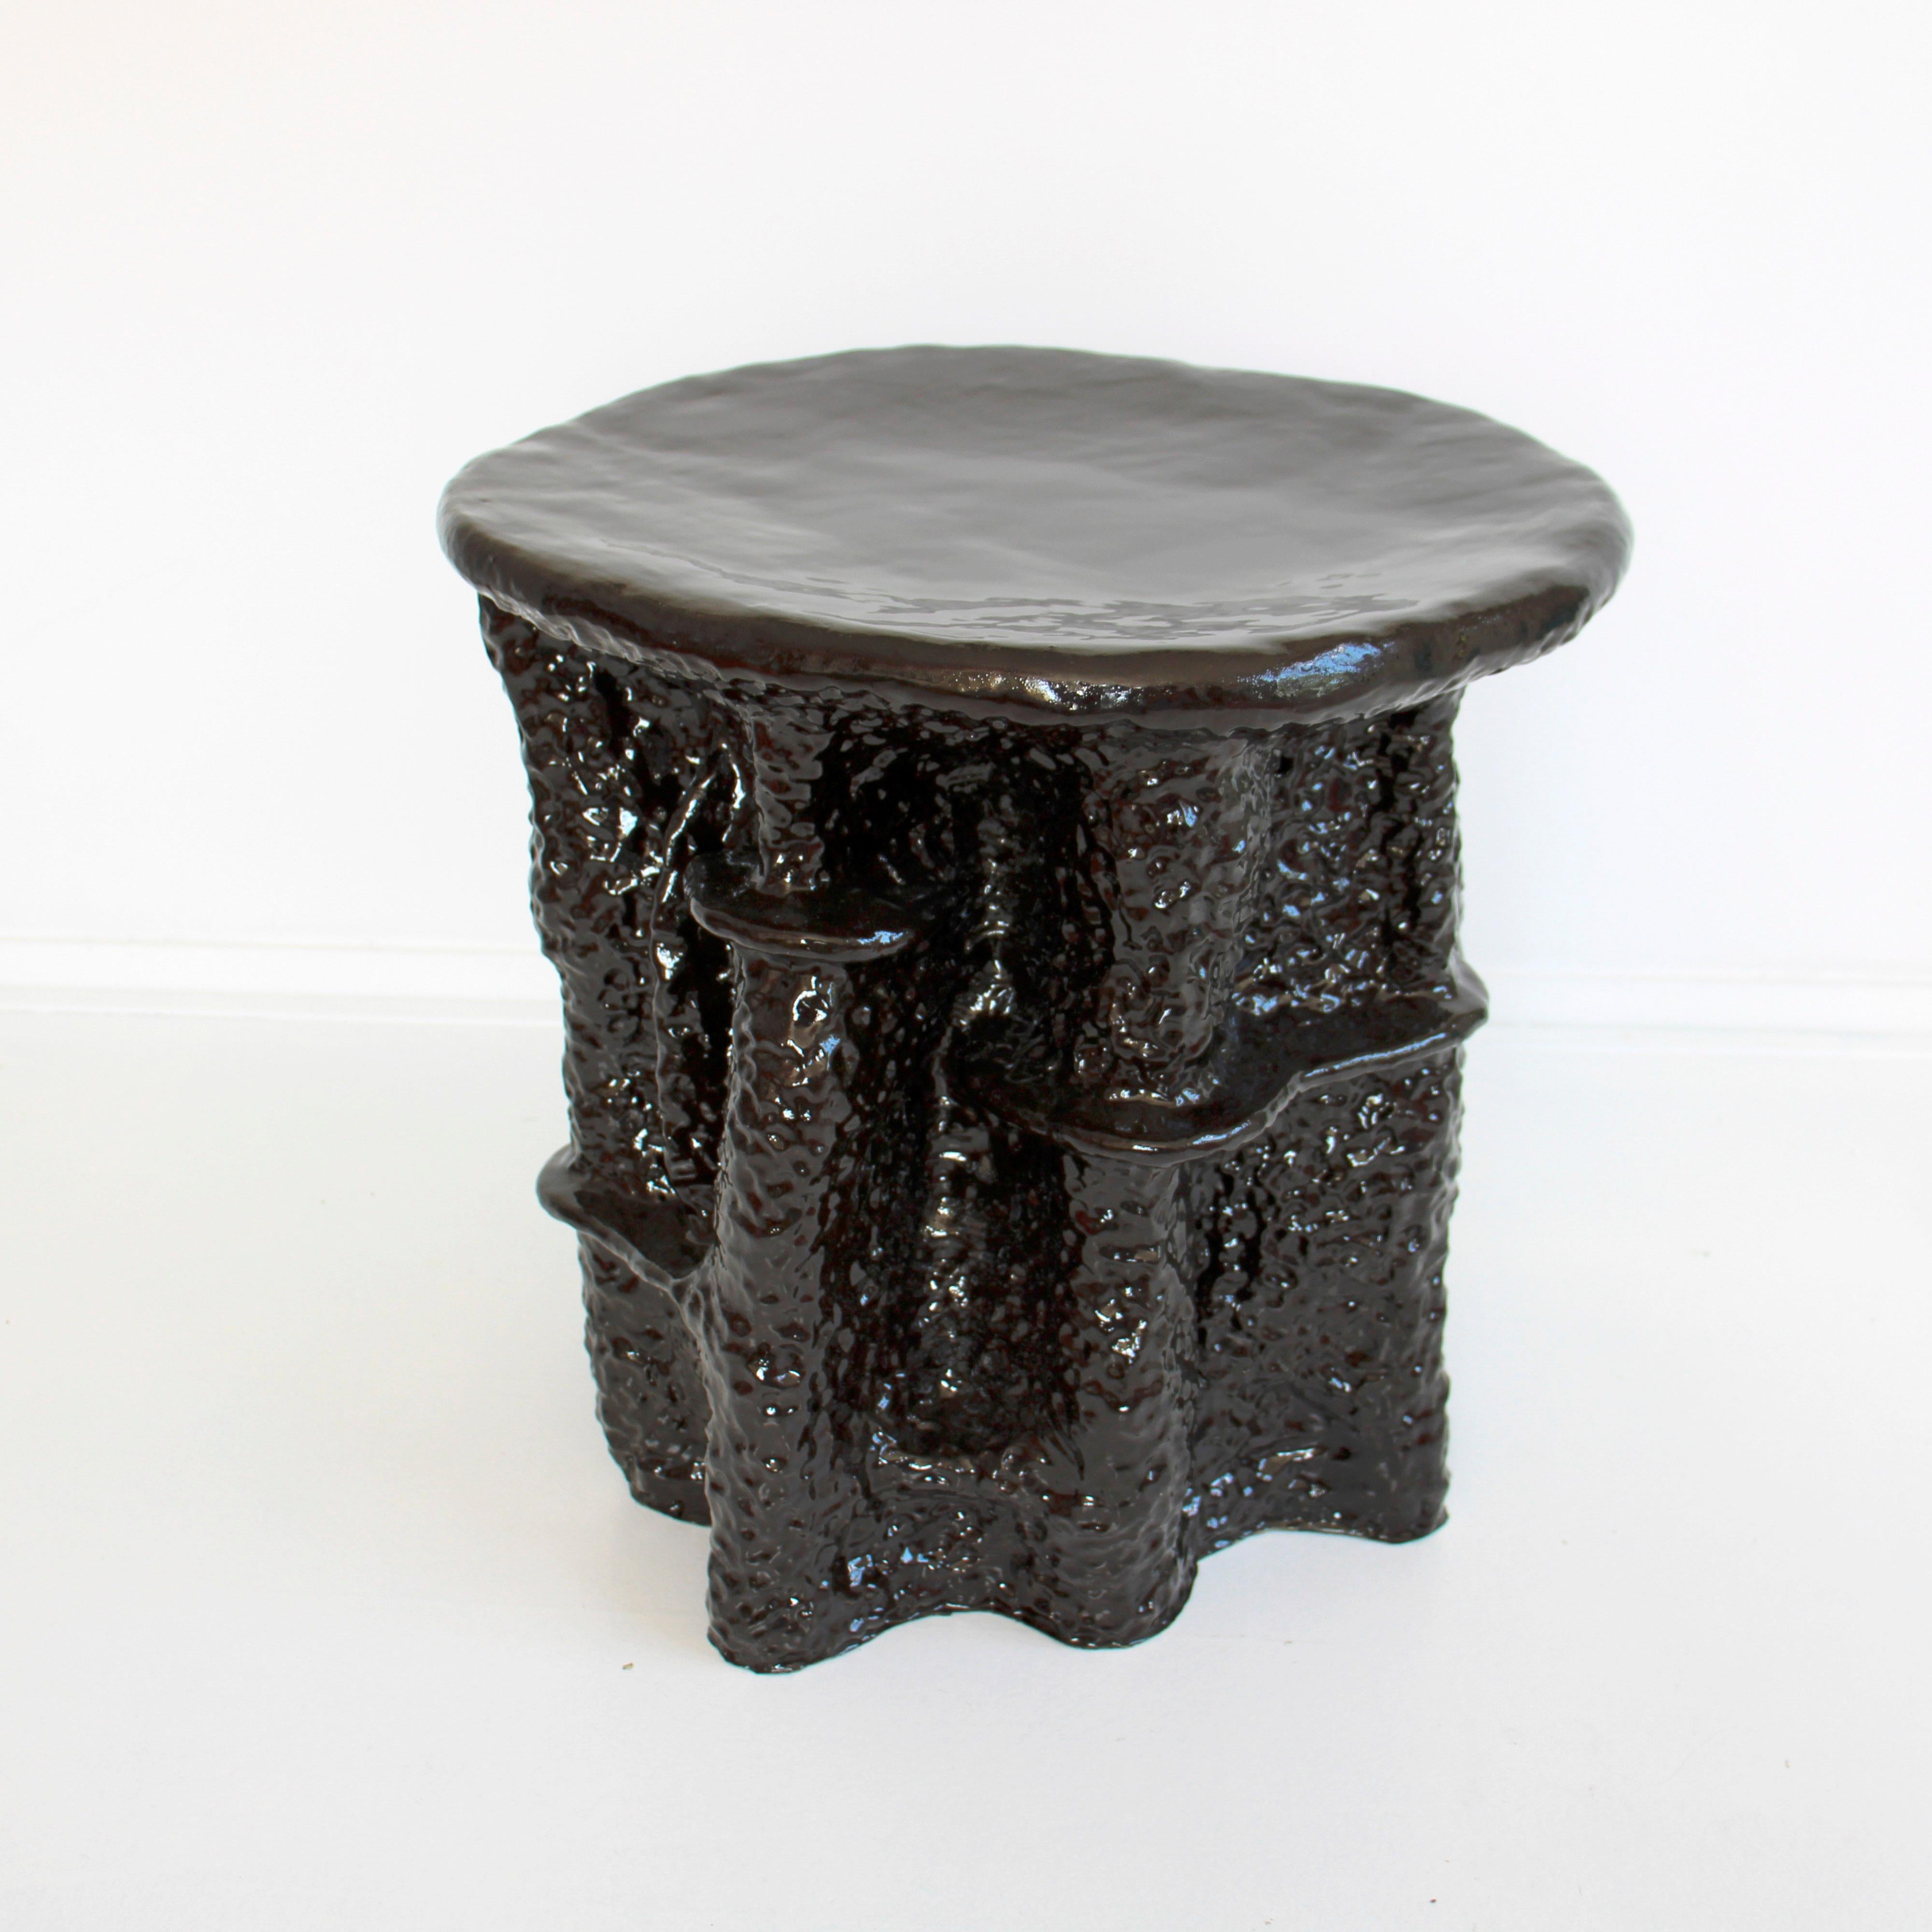 Dutch Contemporary Ceramic Furniture, Table, 2020, Rutger de Regt, the Netherlands